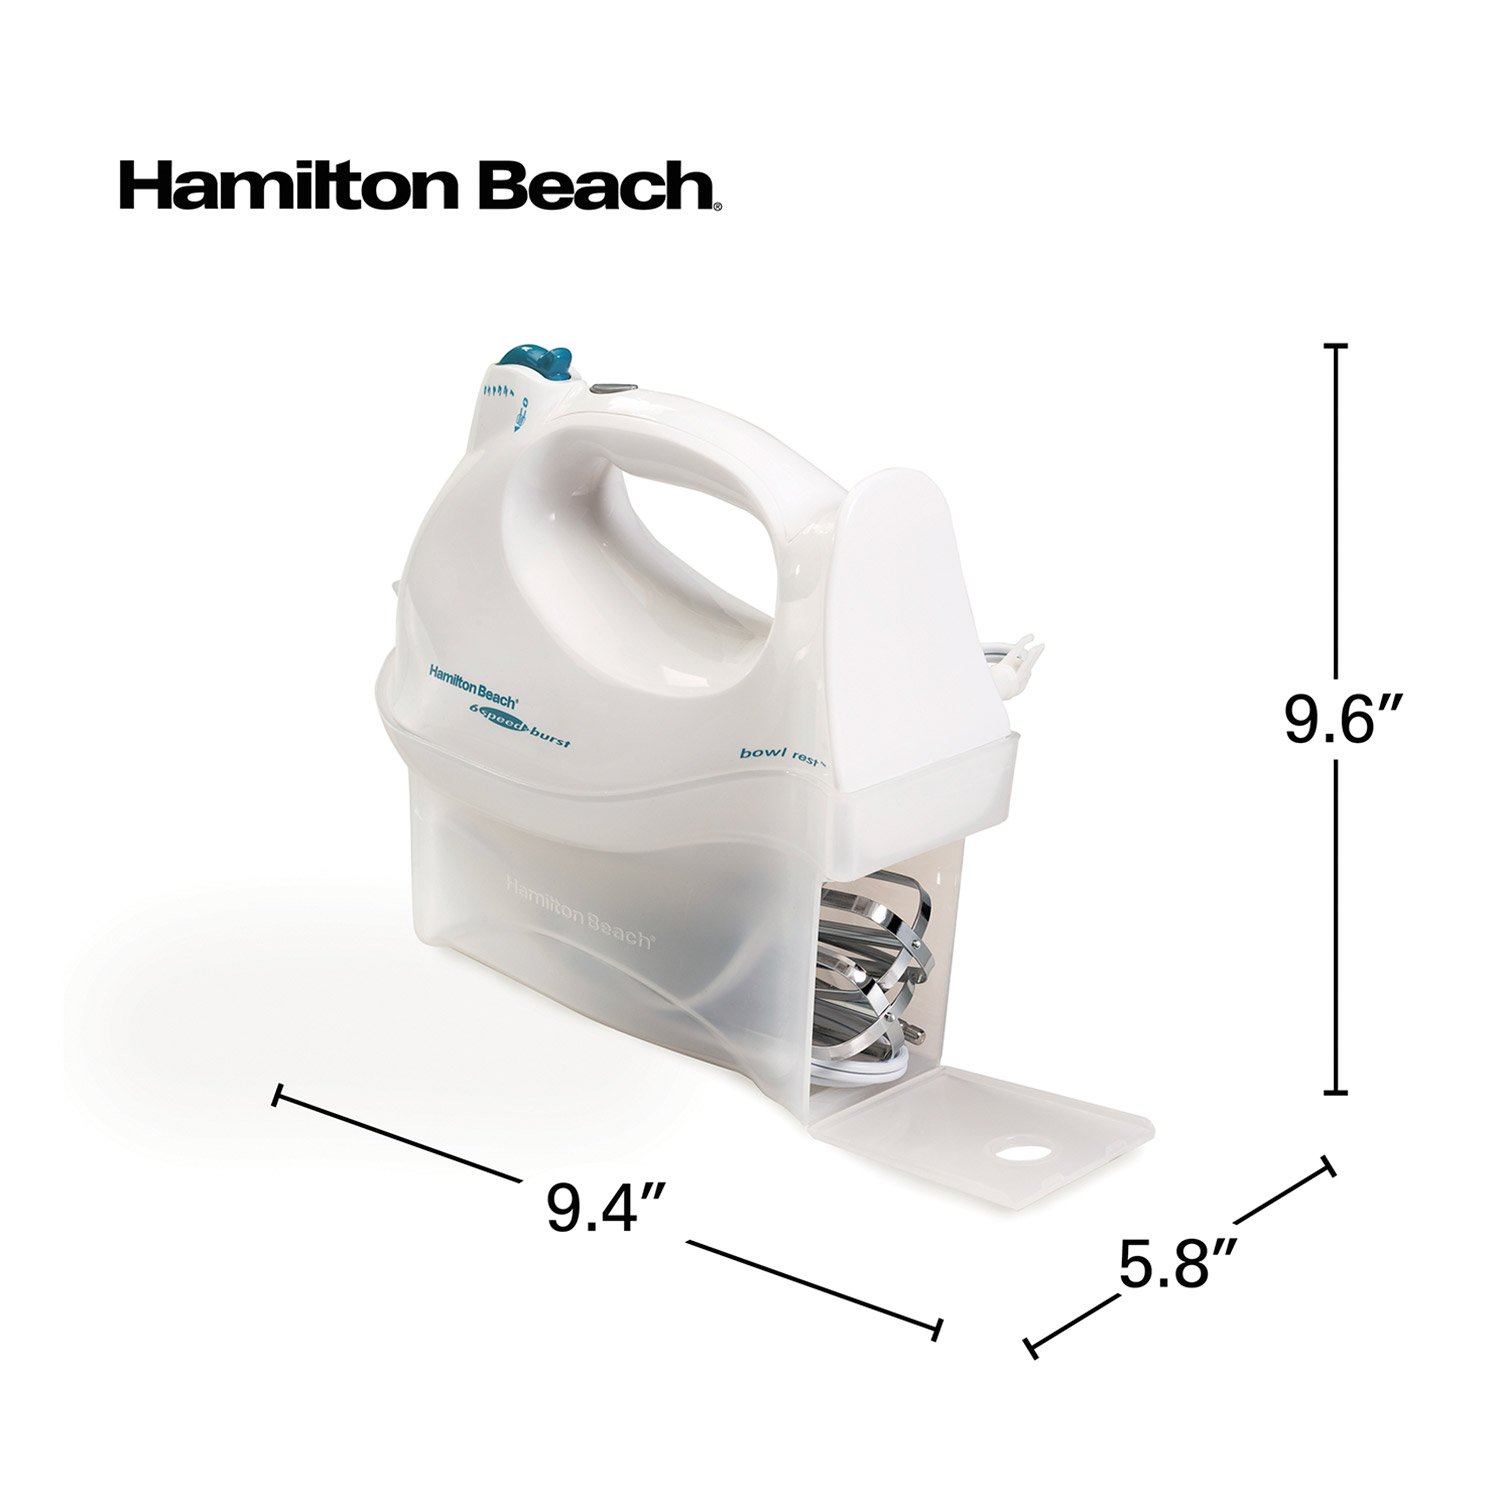 Xinxinlin Hand Mixer Beaters Attachments Compatible with Hamilton Beach Hand Mixers 62682RZ 62692 64699 62695v, for Replacement Hamilton Beach Mixer